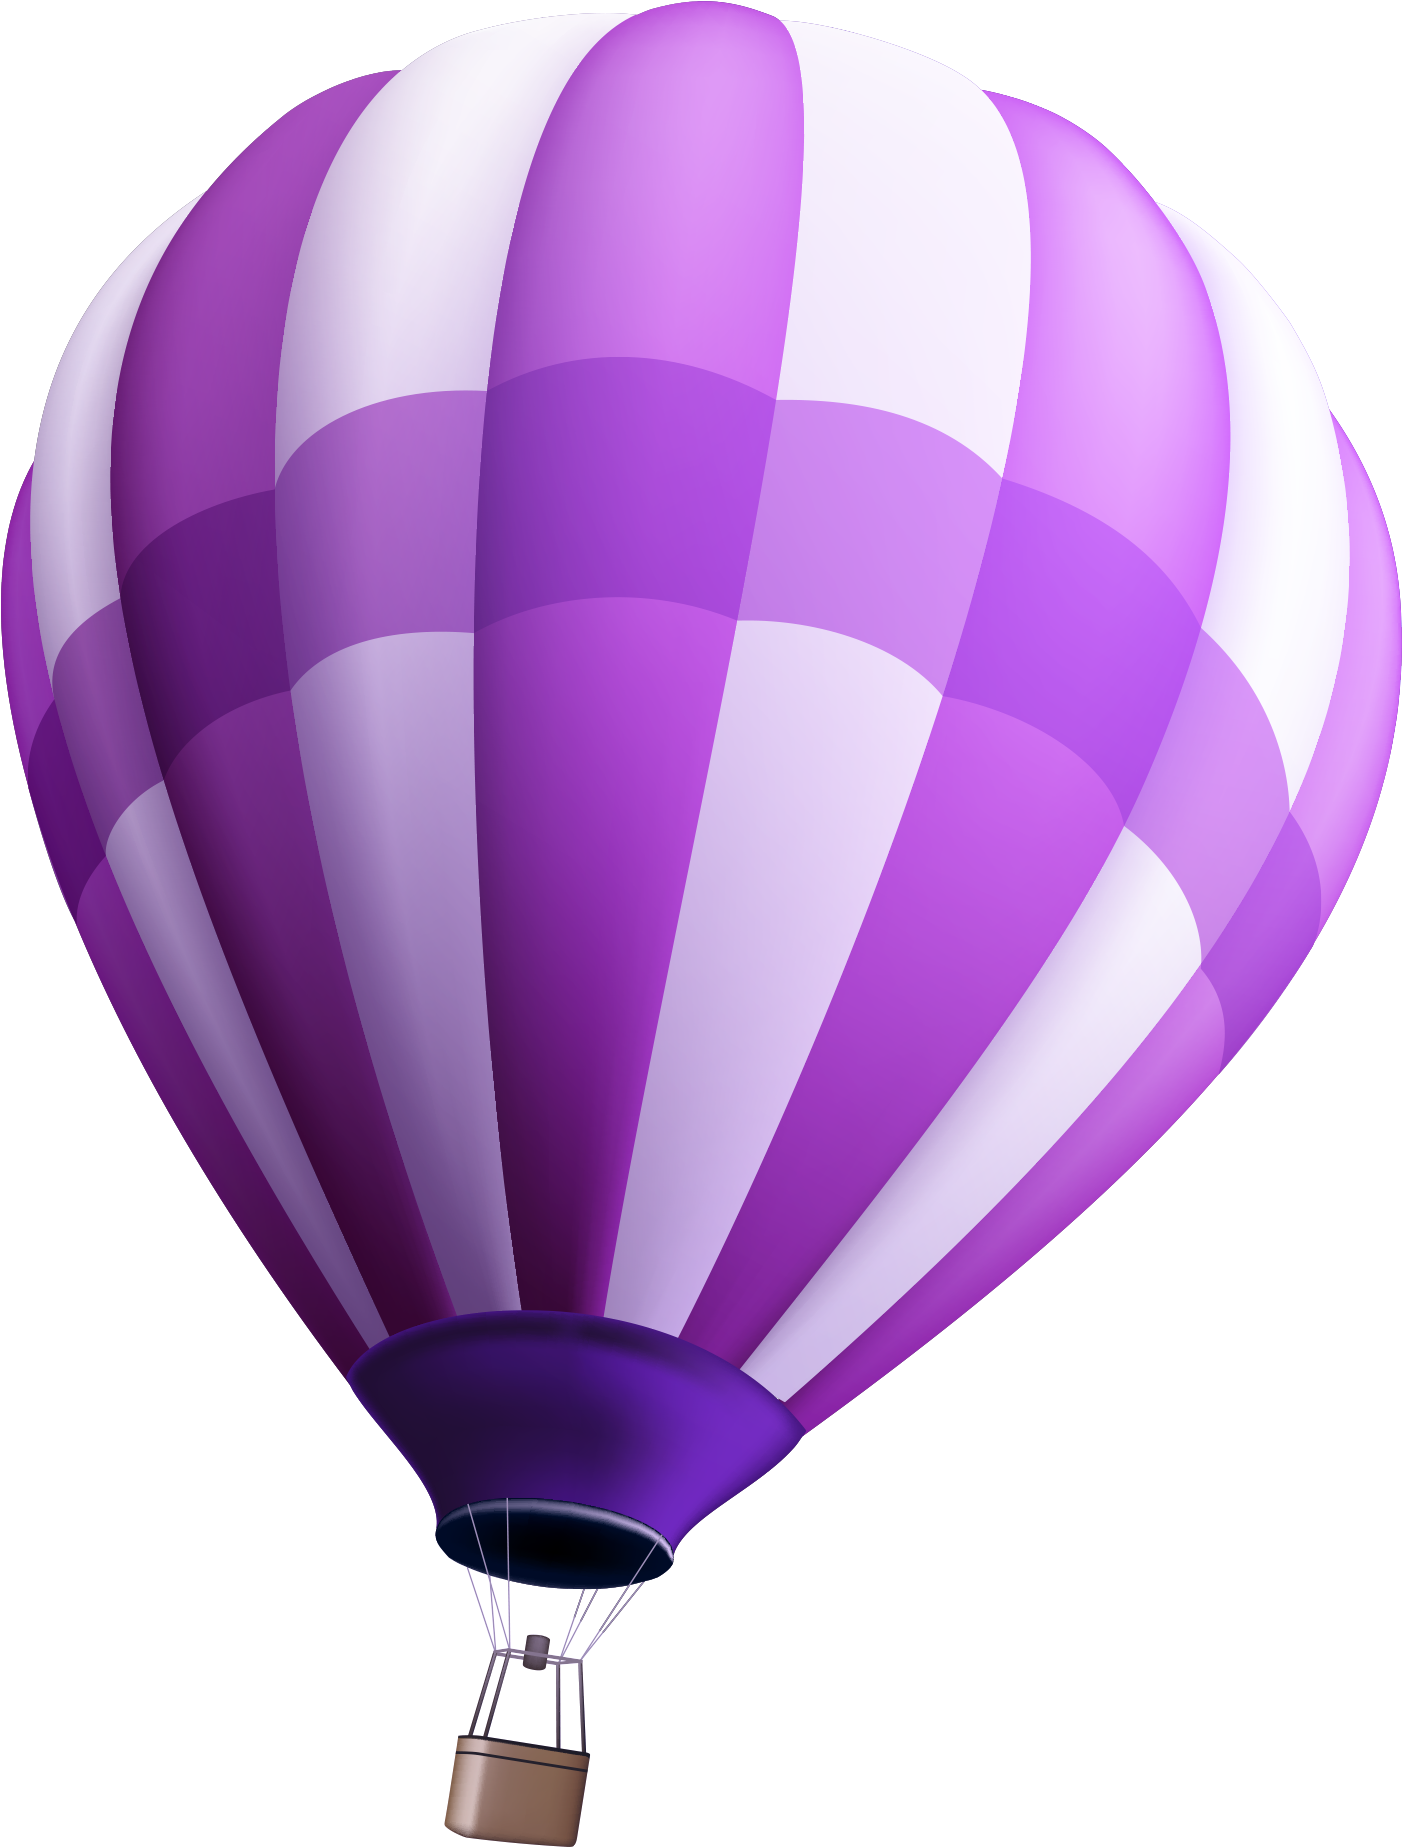 Hot Air Balloon Transparent Image